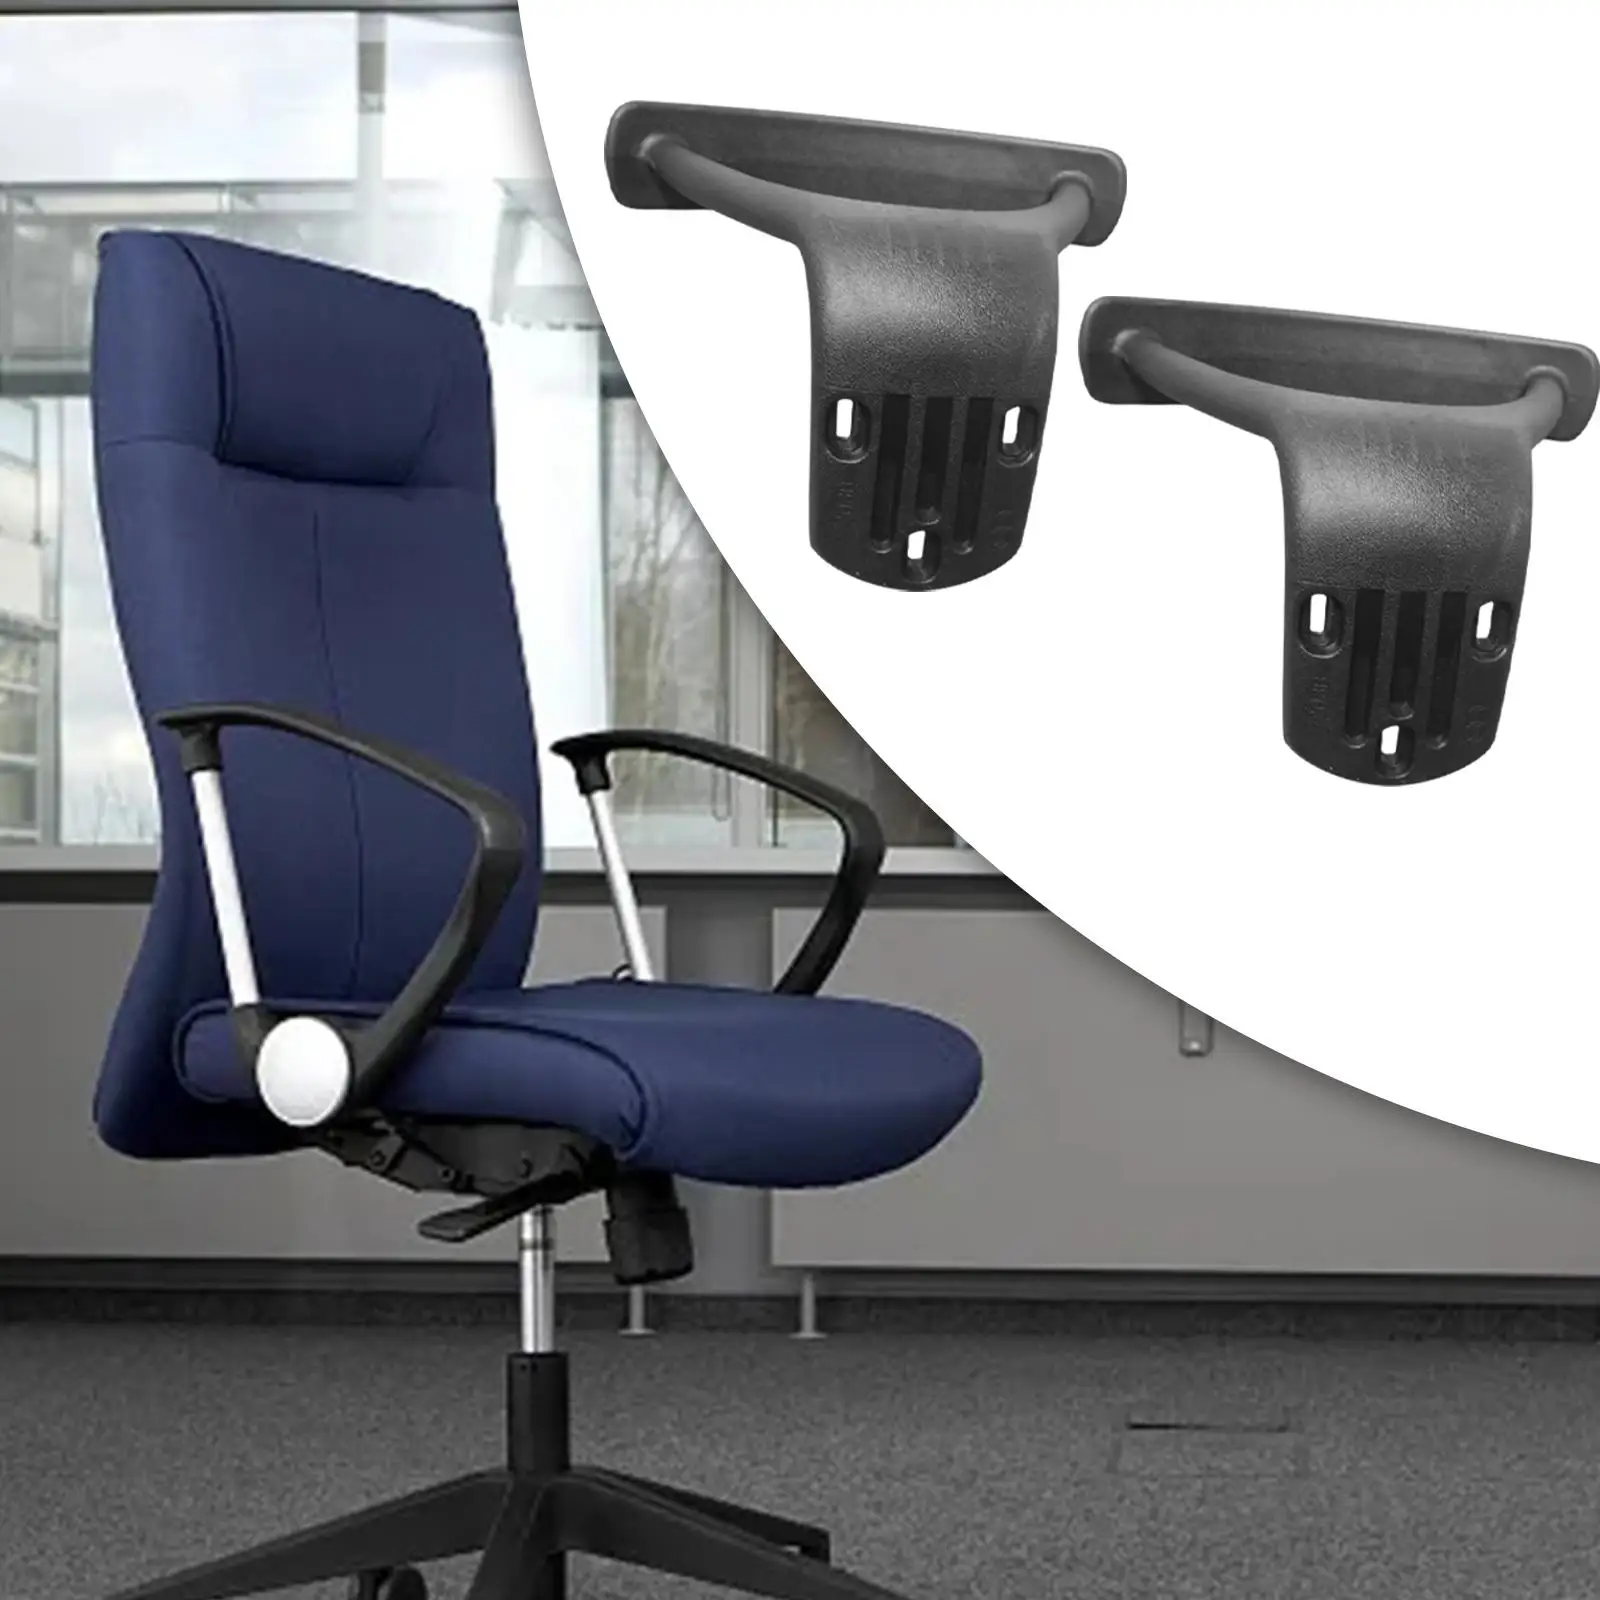 2x Office Computer Chair Handle Bracket Arm Rest Computer Chair Parts for Computer Chair Swivel Lifting Chair Home Office Chair